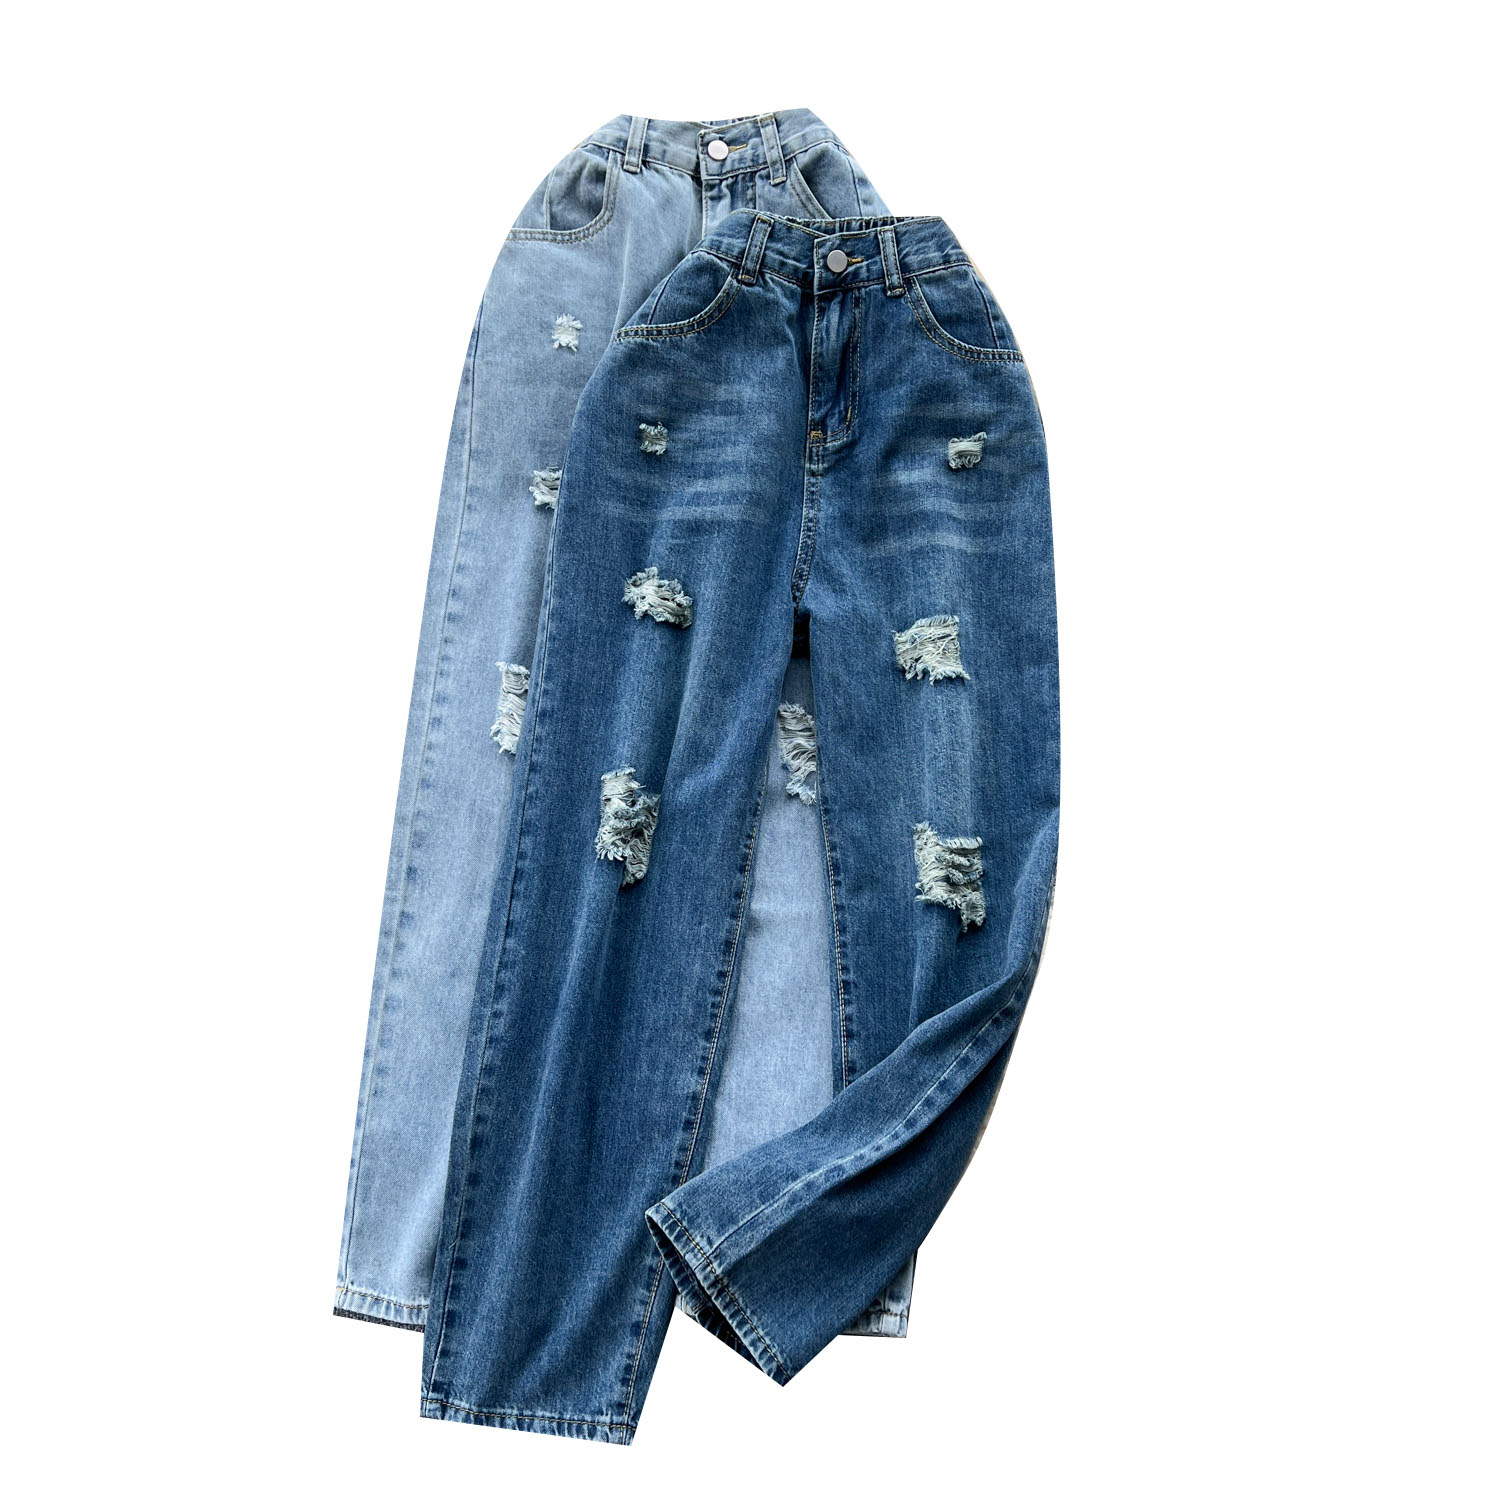 American Niche Street Retro Ripped Jeans Women's Summer High Waist Slimming All-Matching Hot Girl Wide Leg Pants Trousers